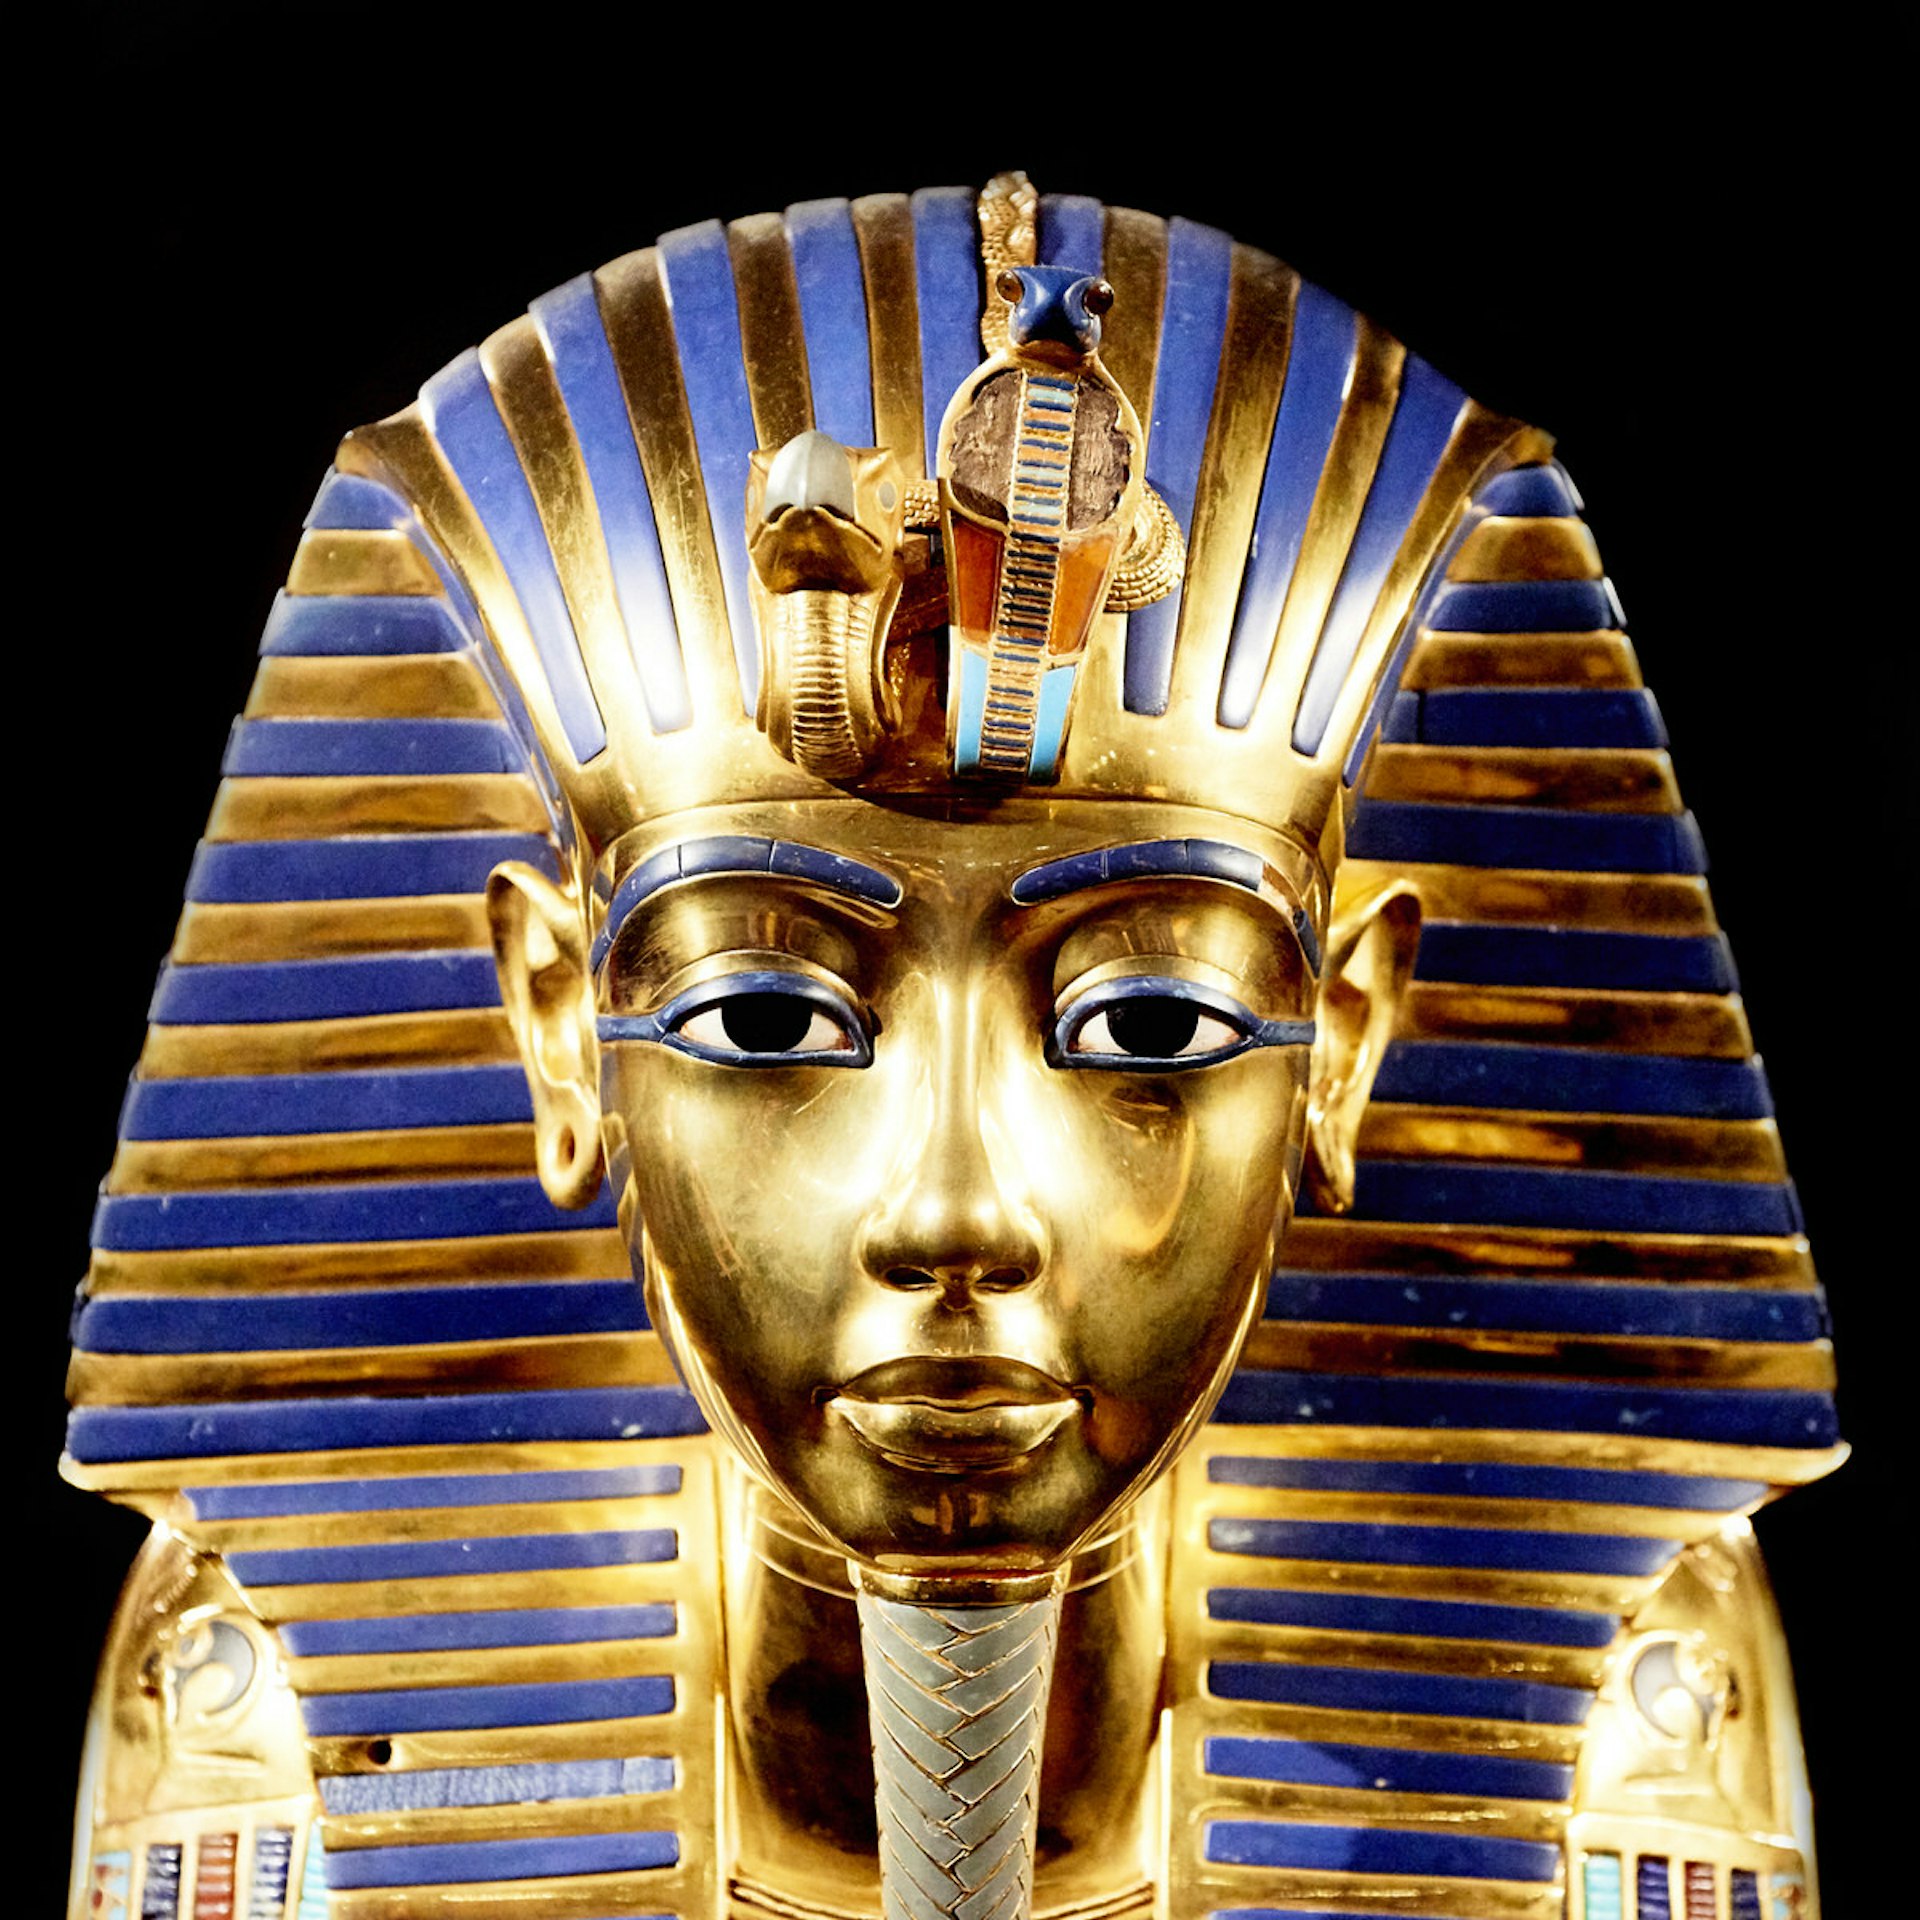 Golden mask of Tutankhamun. Image by Petr Bonek / Shutterstock